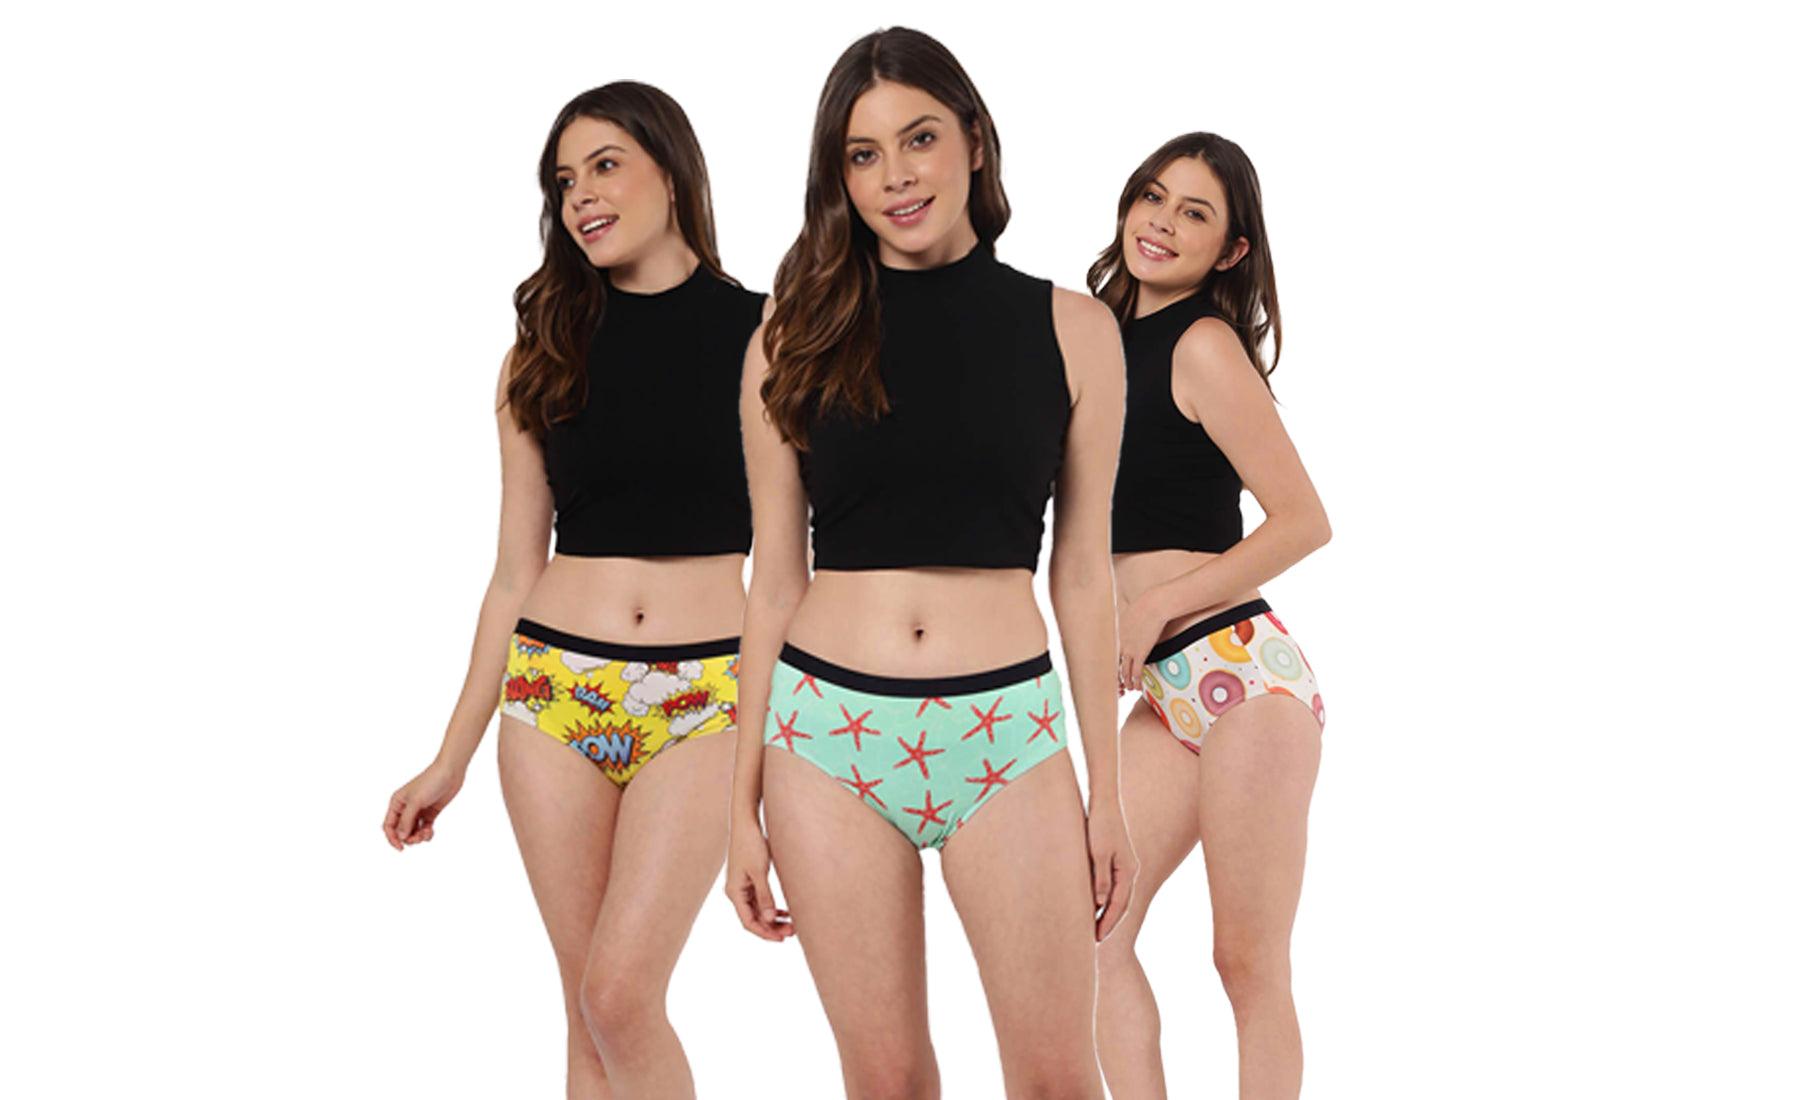 Slutty Women's Panties Clear Cheeky Underwear Soft Mid Waisted